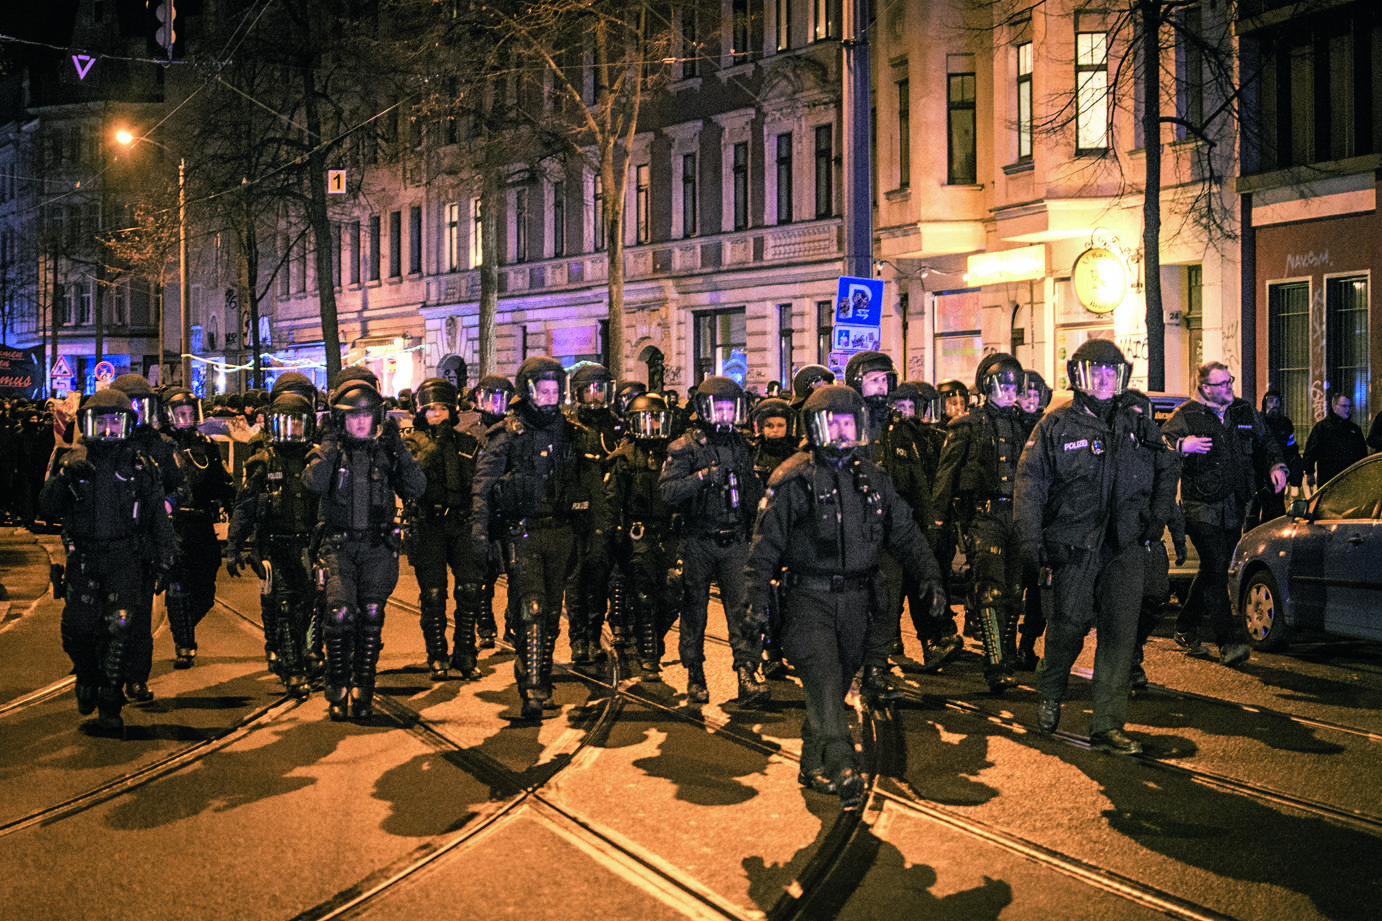   Doppelte Standards | Linkem Protest in Leipzig begegnet die Polizei besonders rabiat  